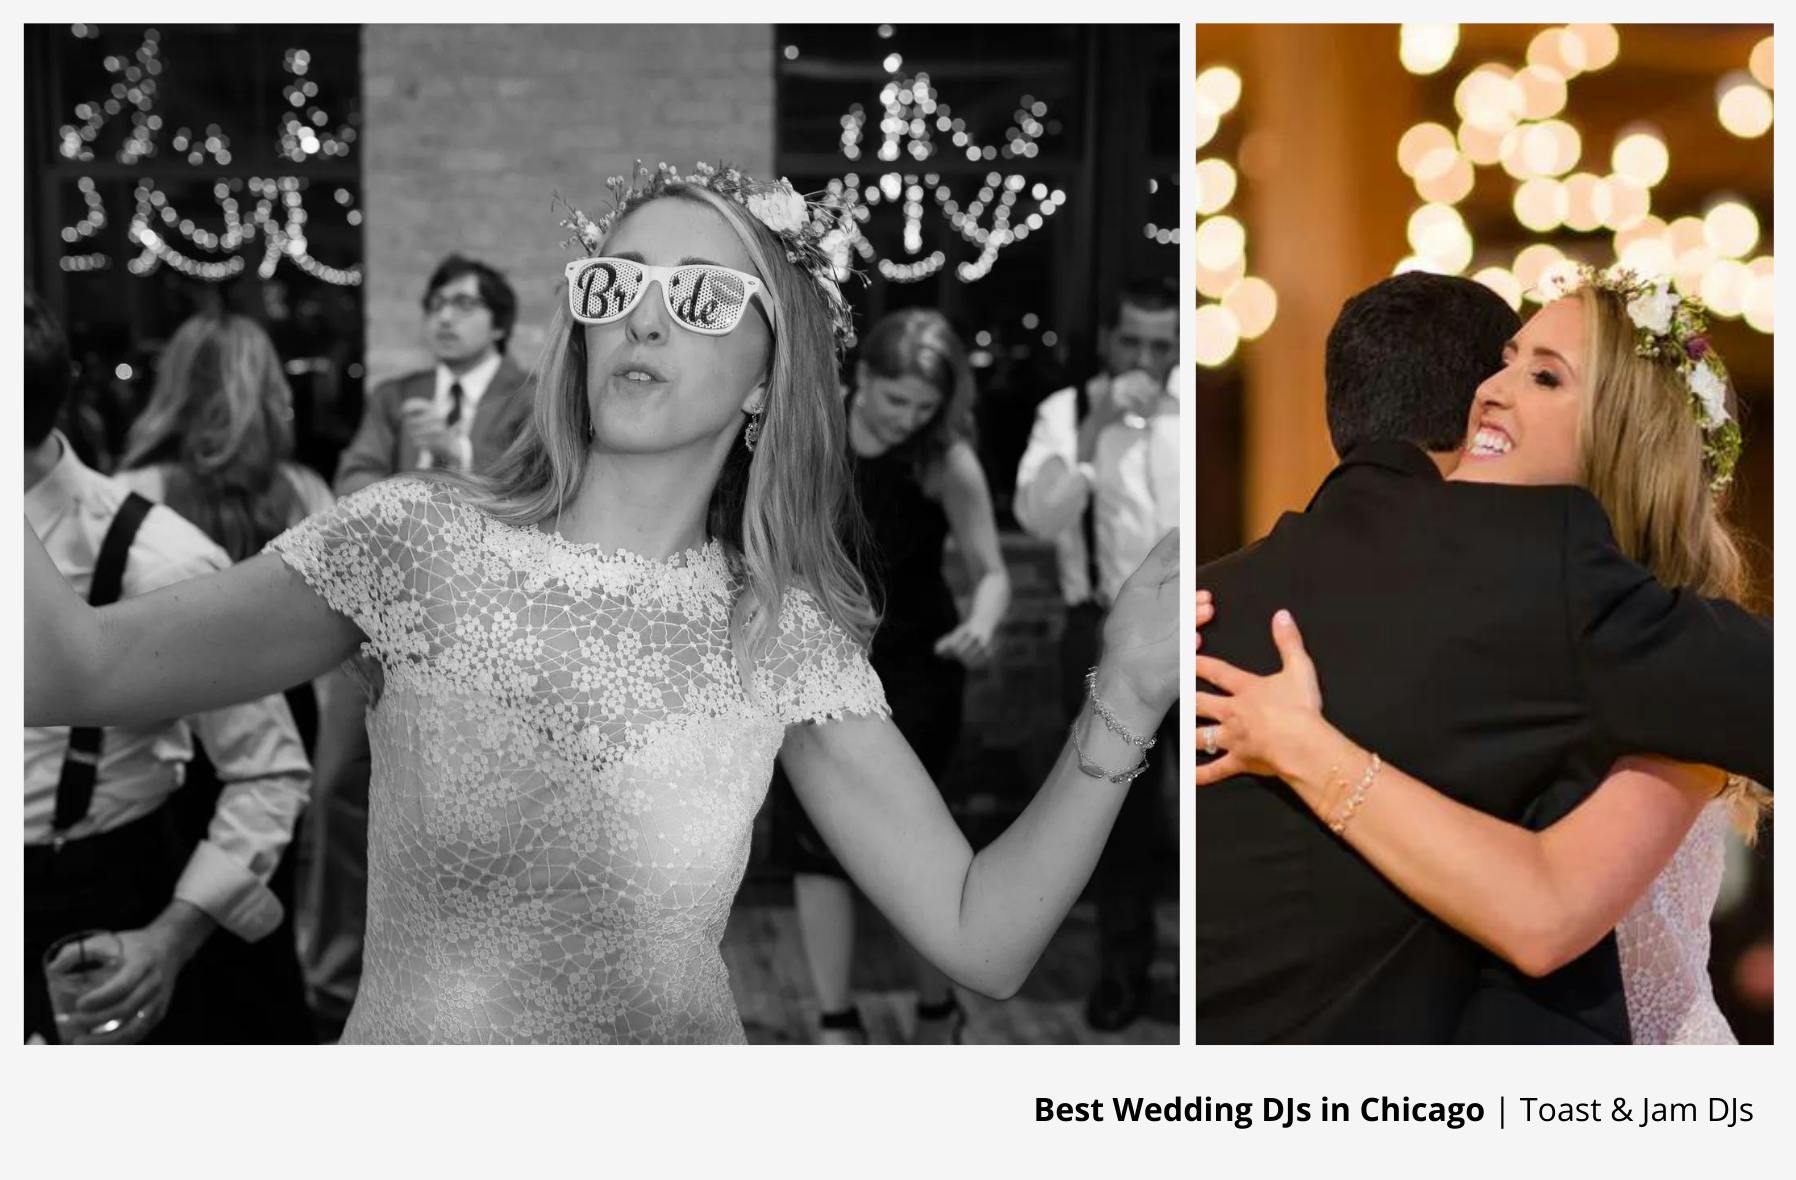 bride in white wearing novelty glasses dancing and bride hugging her husband on dance floor to wedding dj | PartySlate